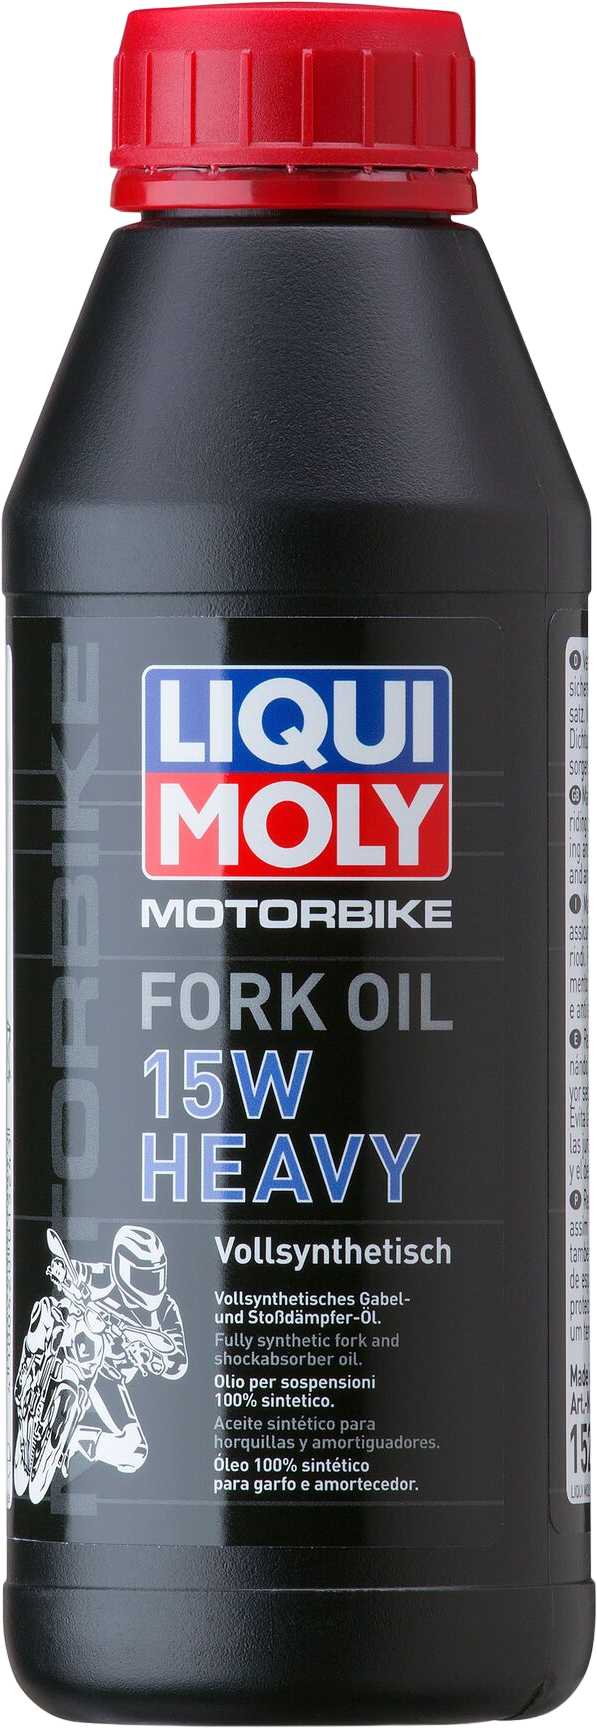 Liqui Moly Motorbike Fork Oil 15W heavy, 500 ml